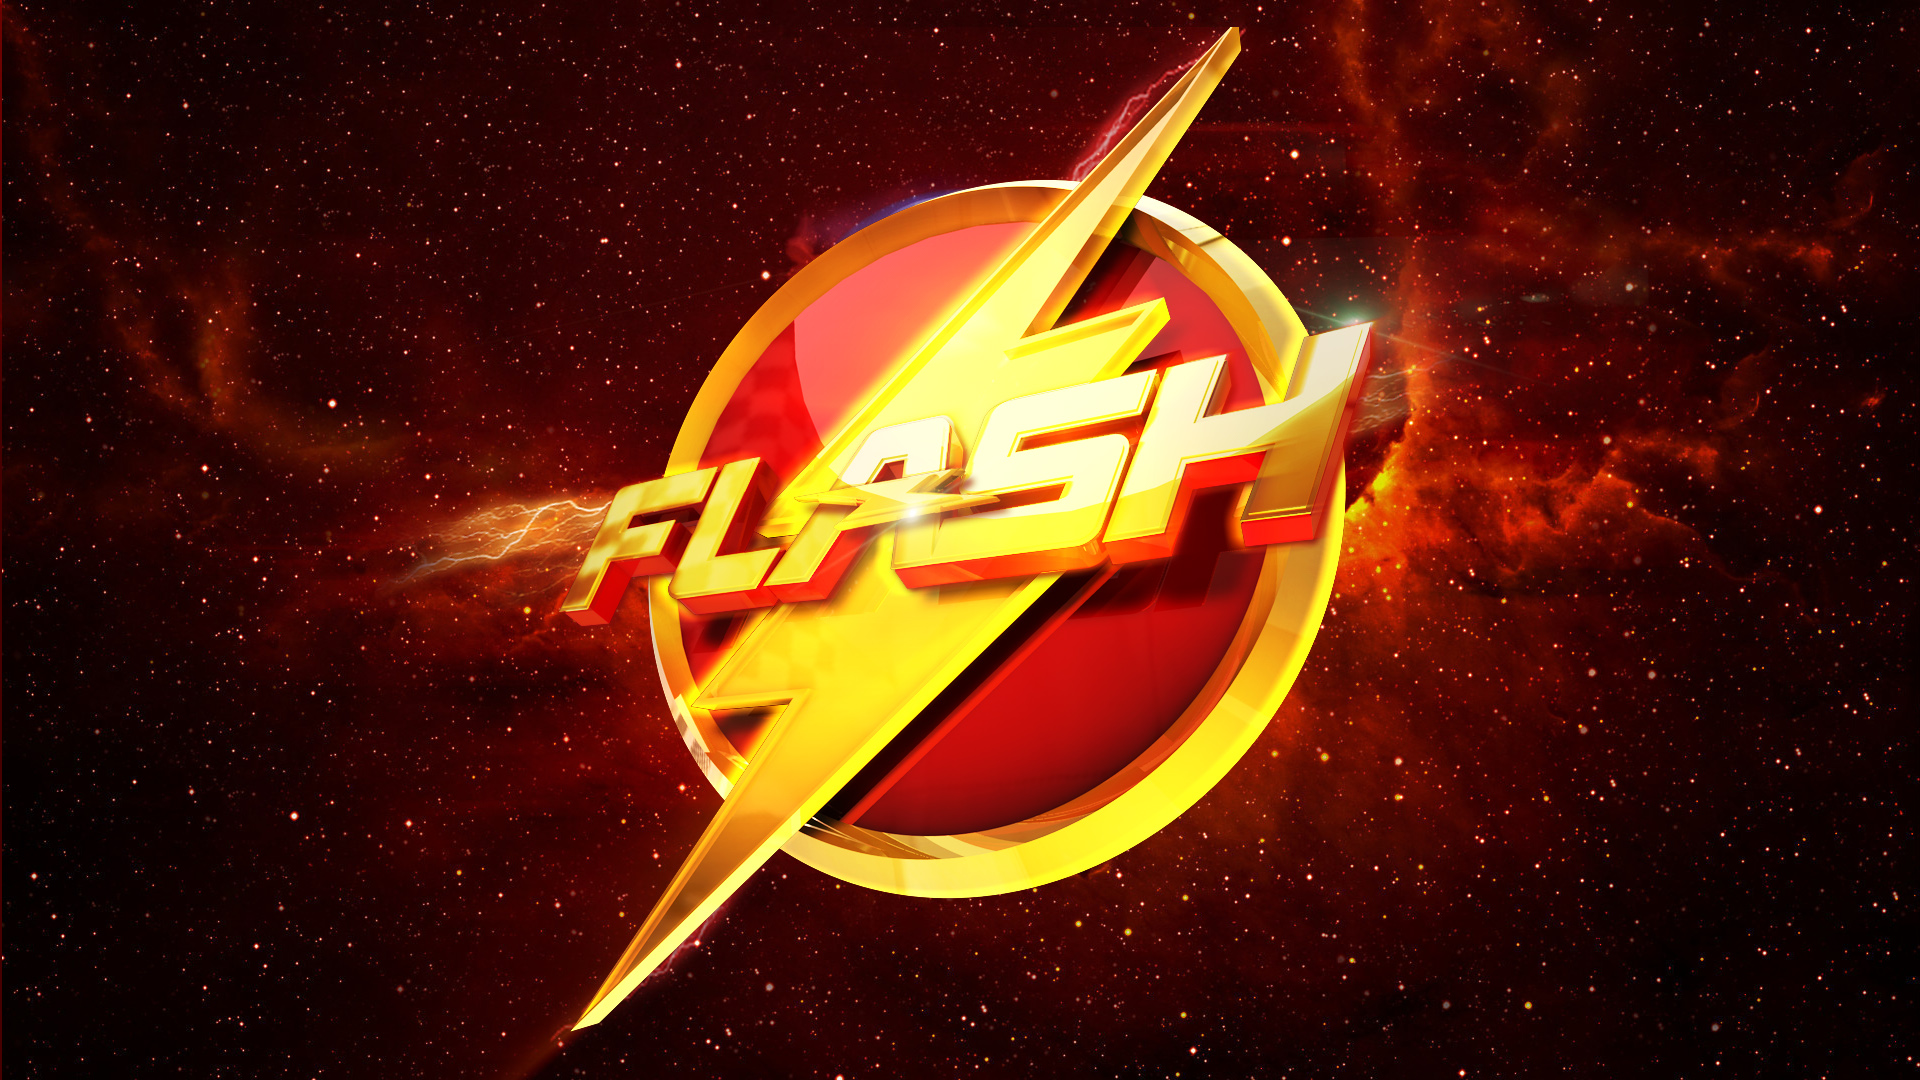 the flash live wallpaper,font,flash,space,graphics,logo